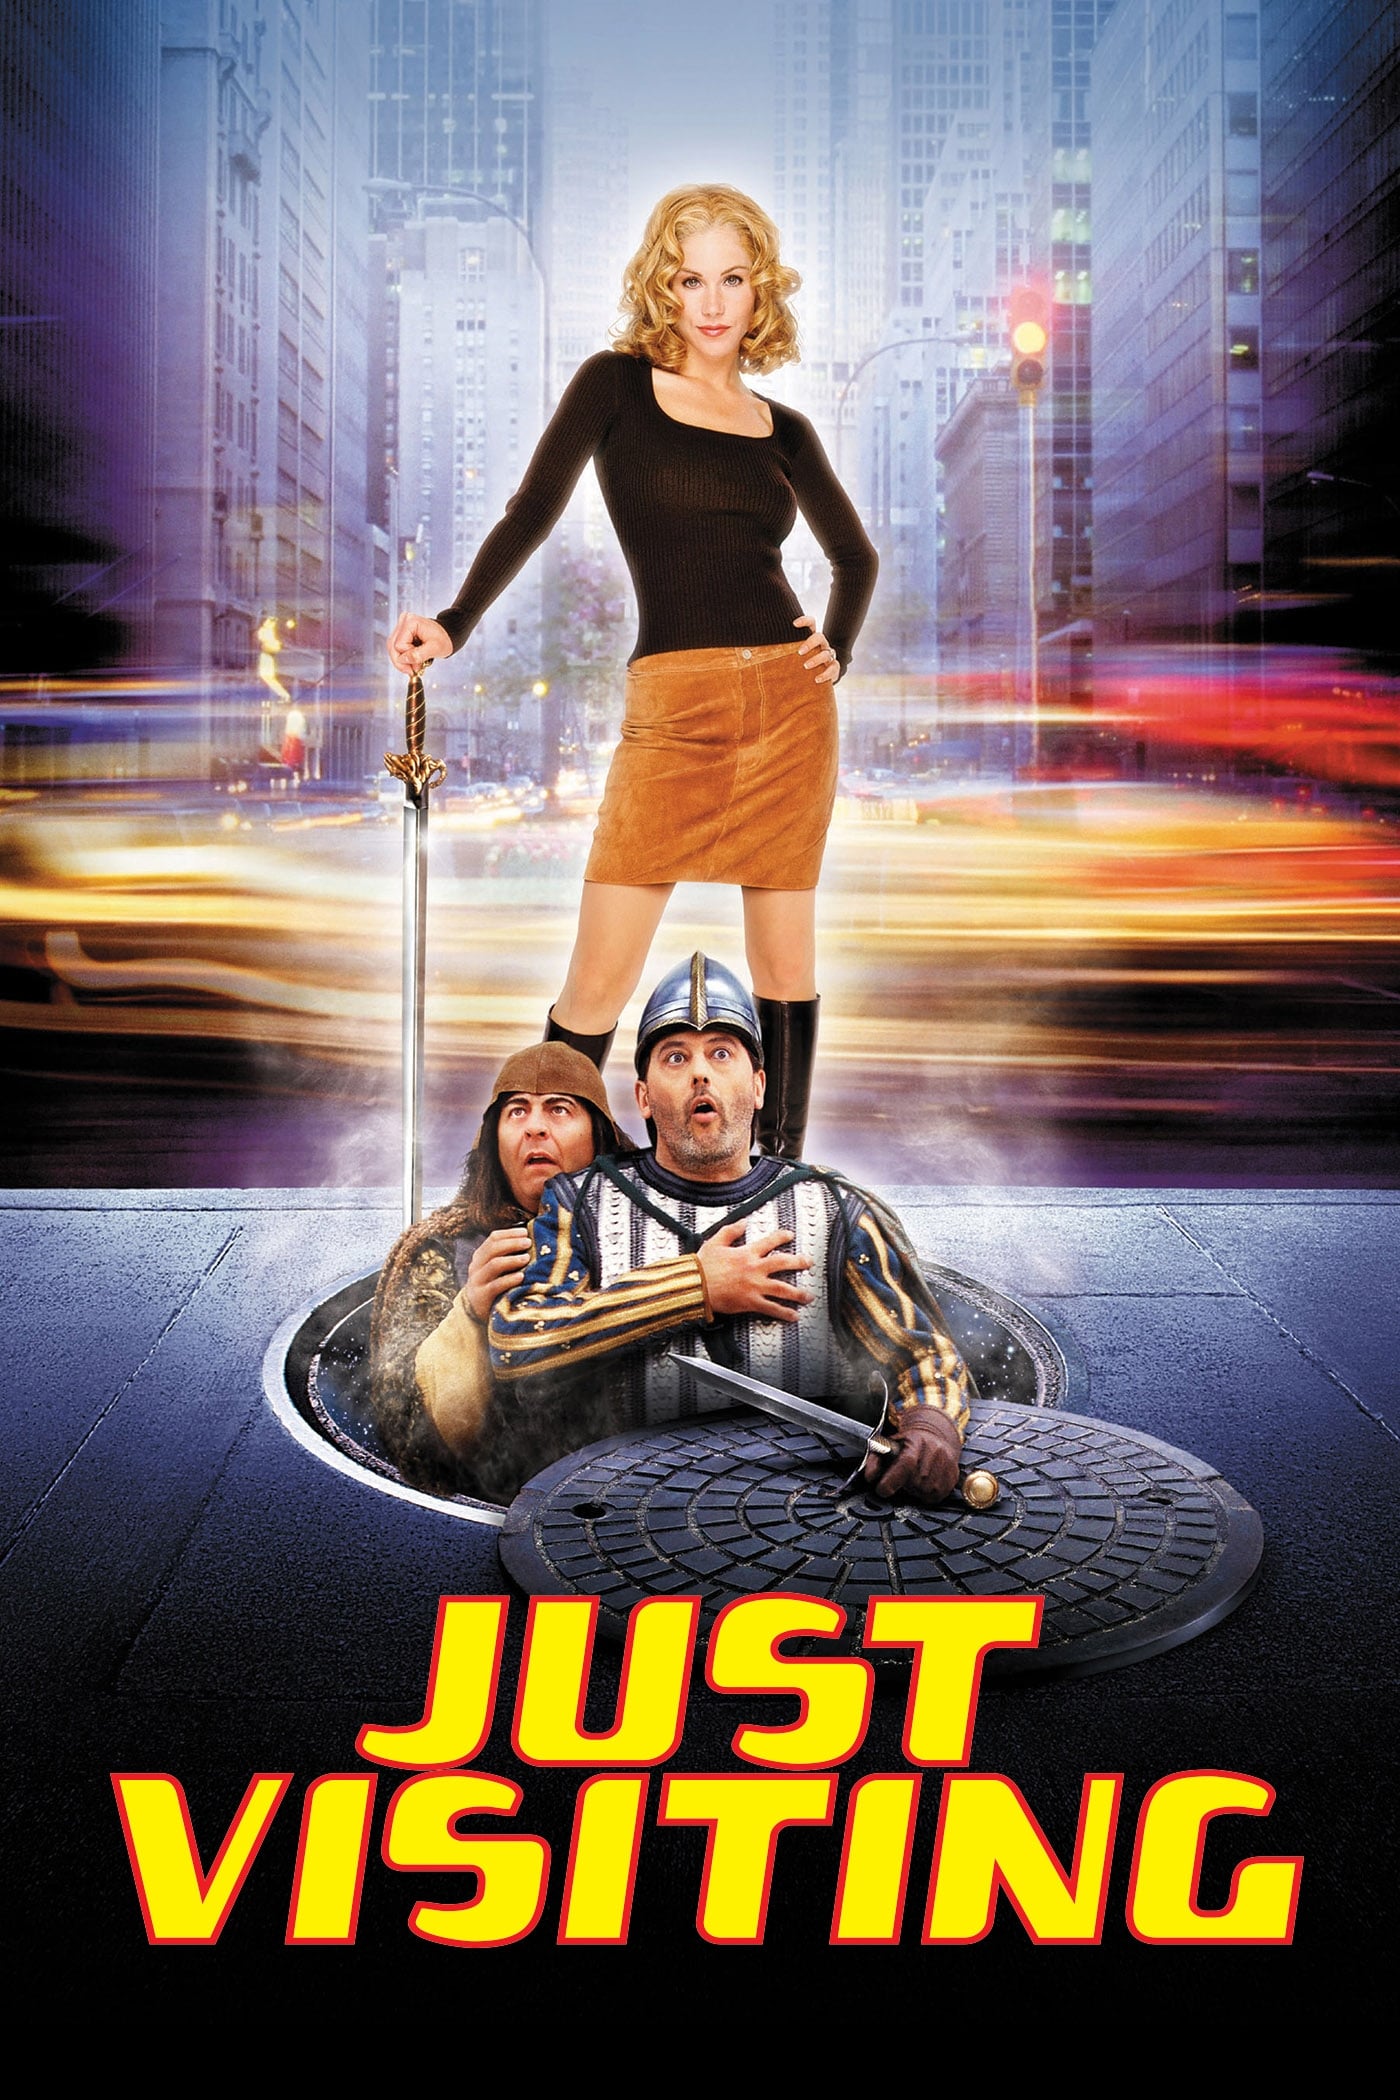 Just Visiting (2001)